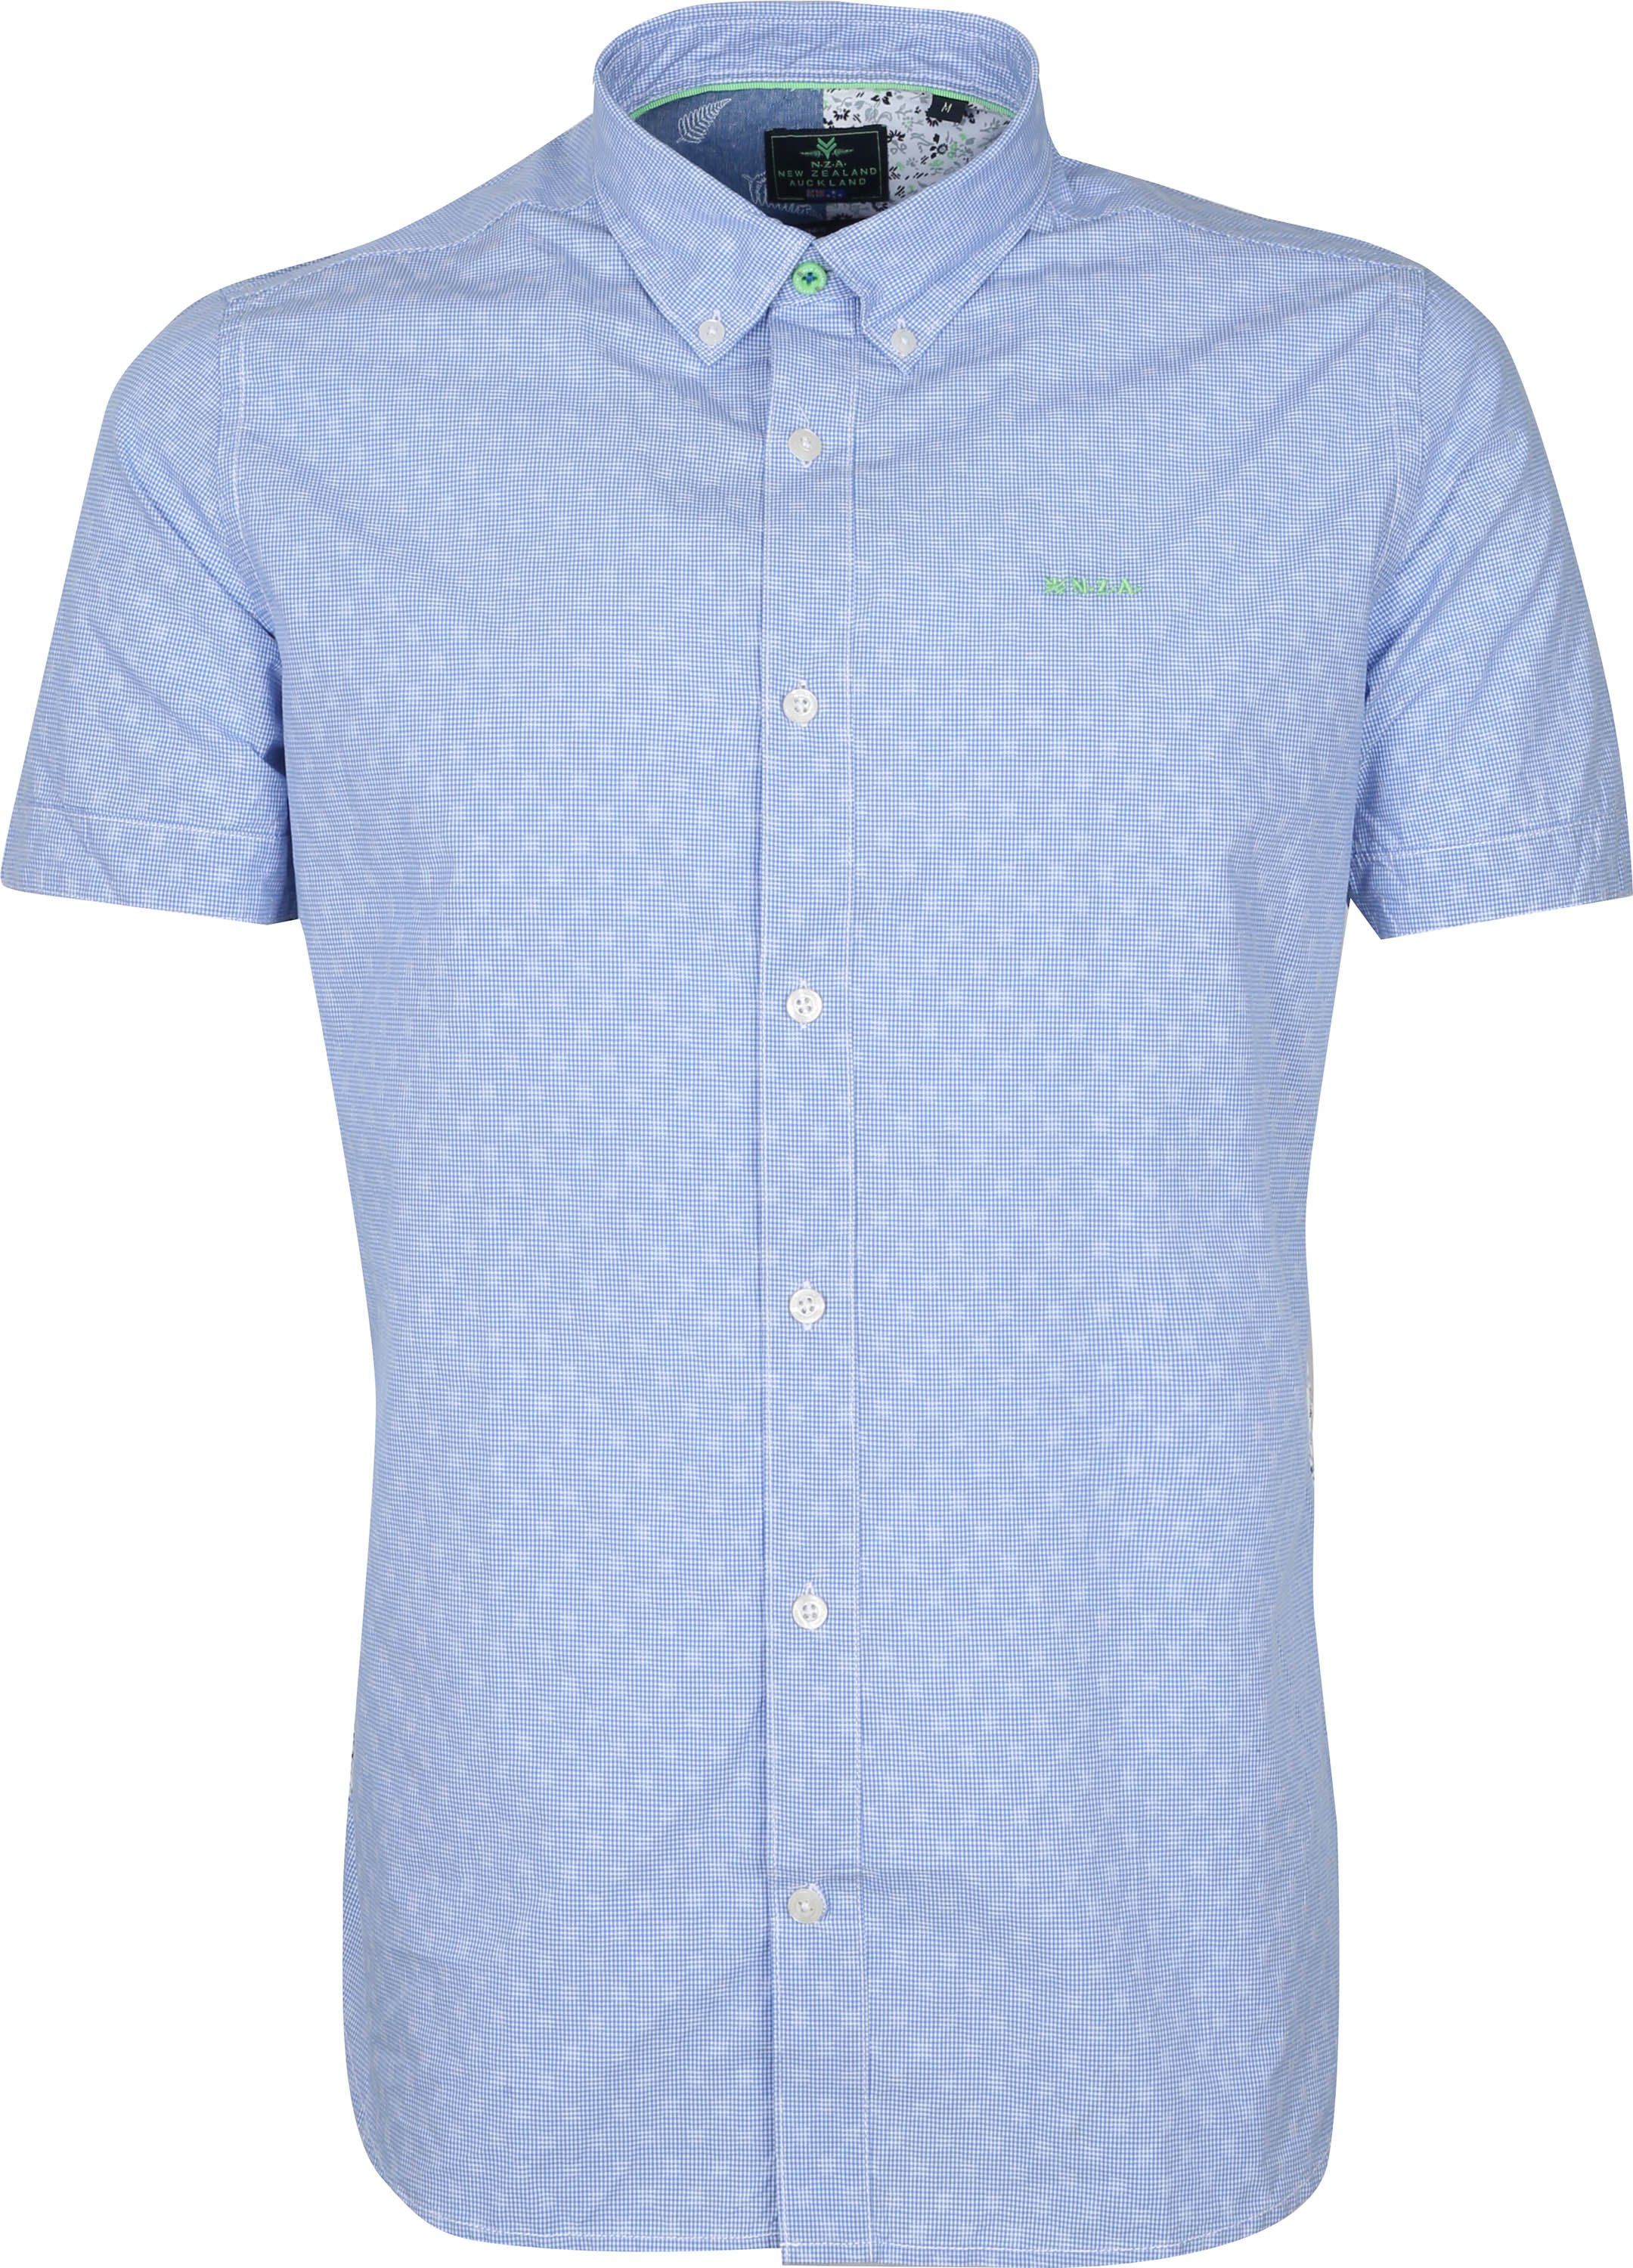 NZA Shirt Short Sleeve Rere Light Blue size M